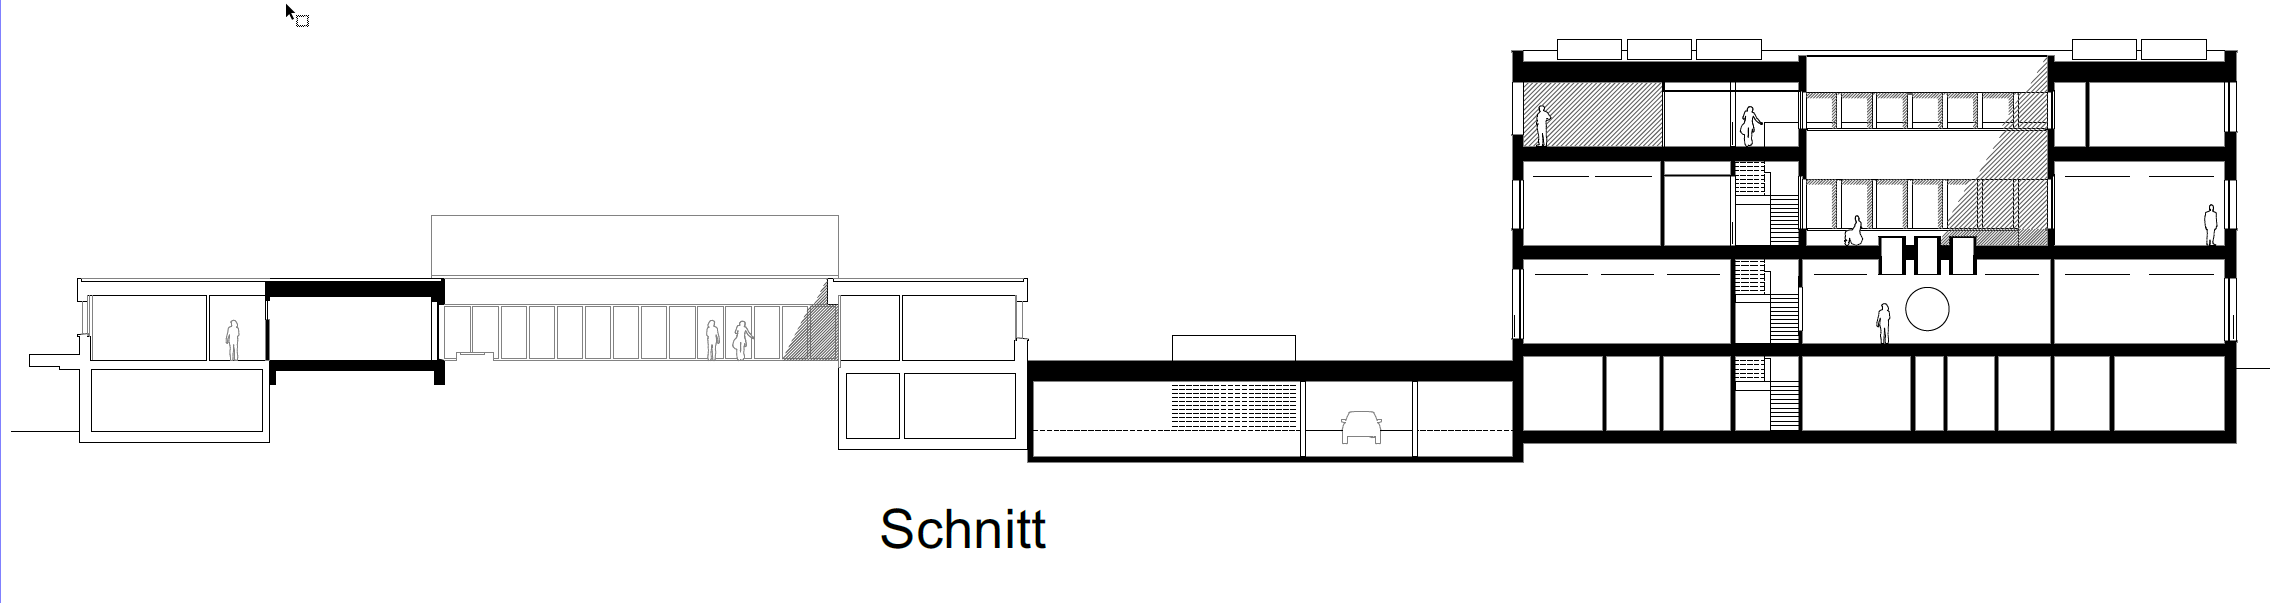 Fassade_Schnitt